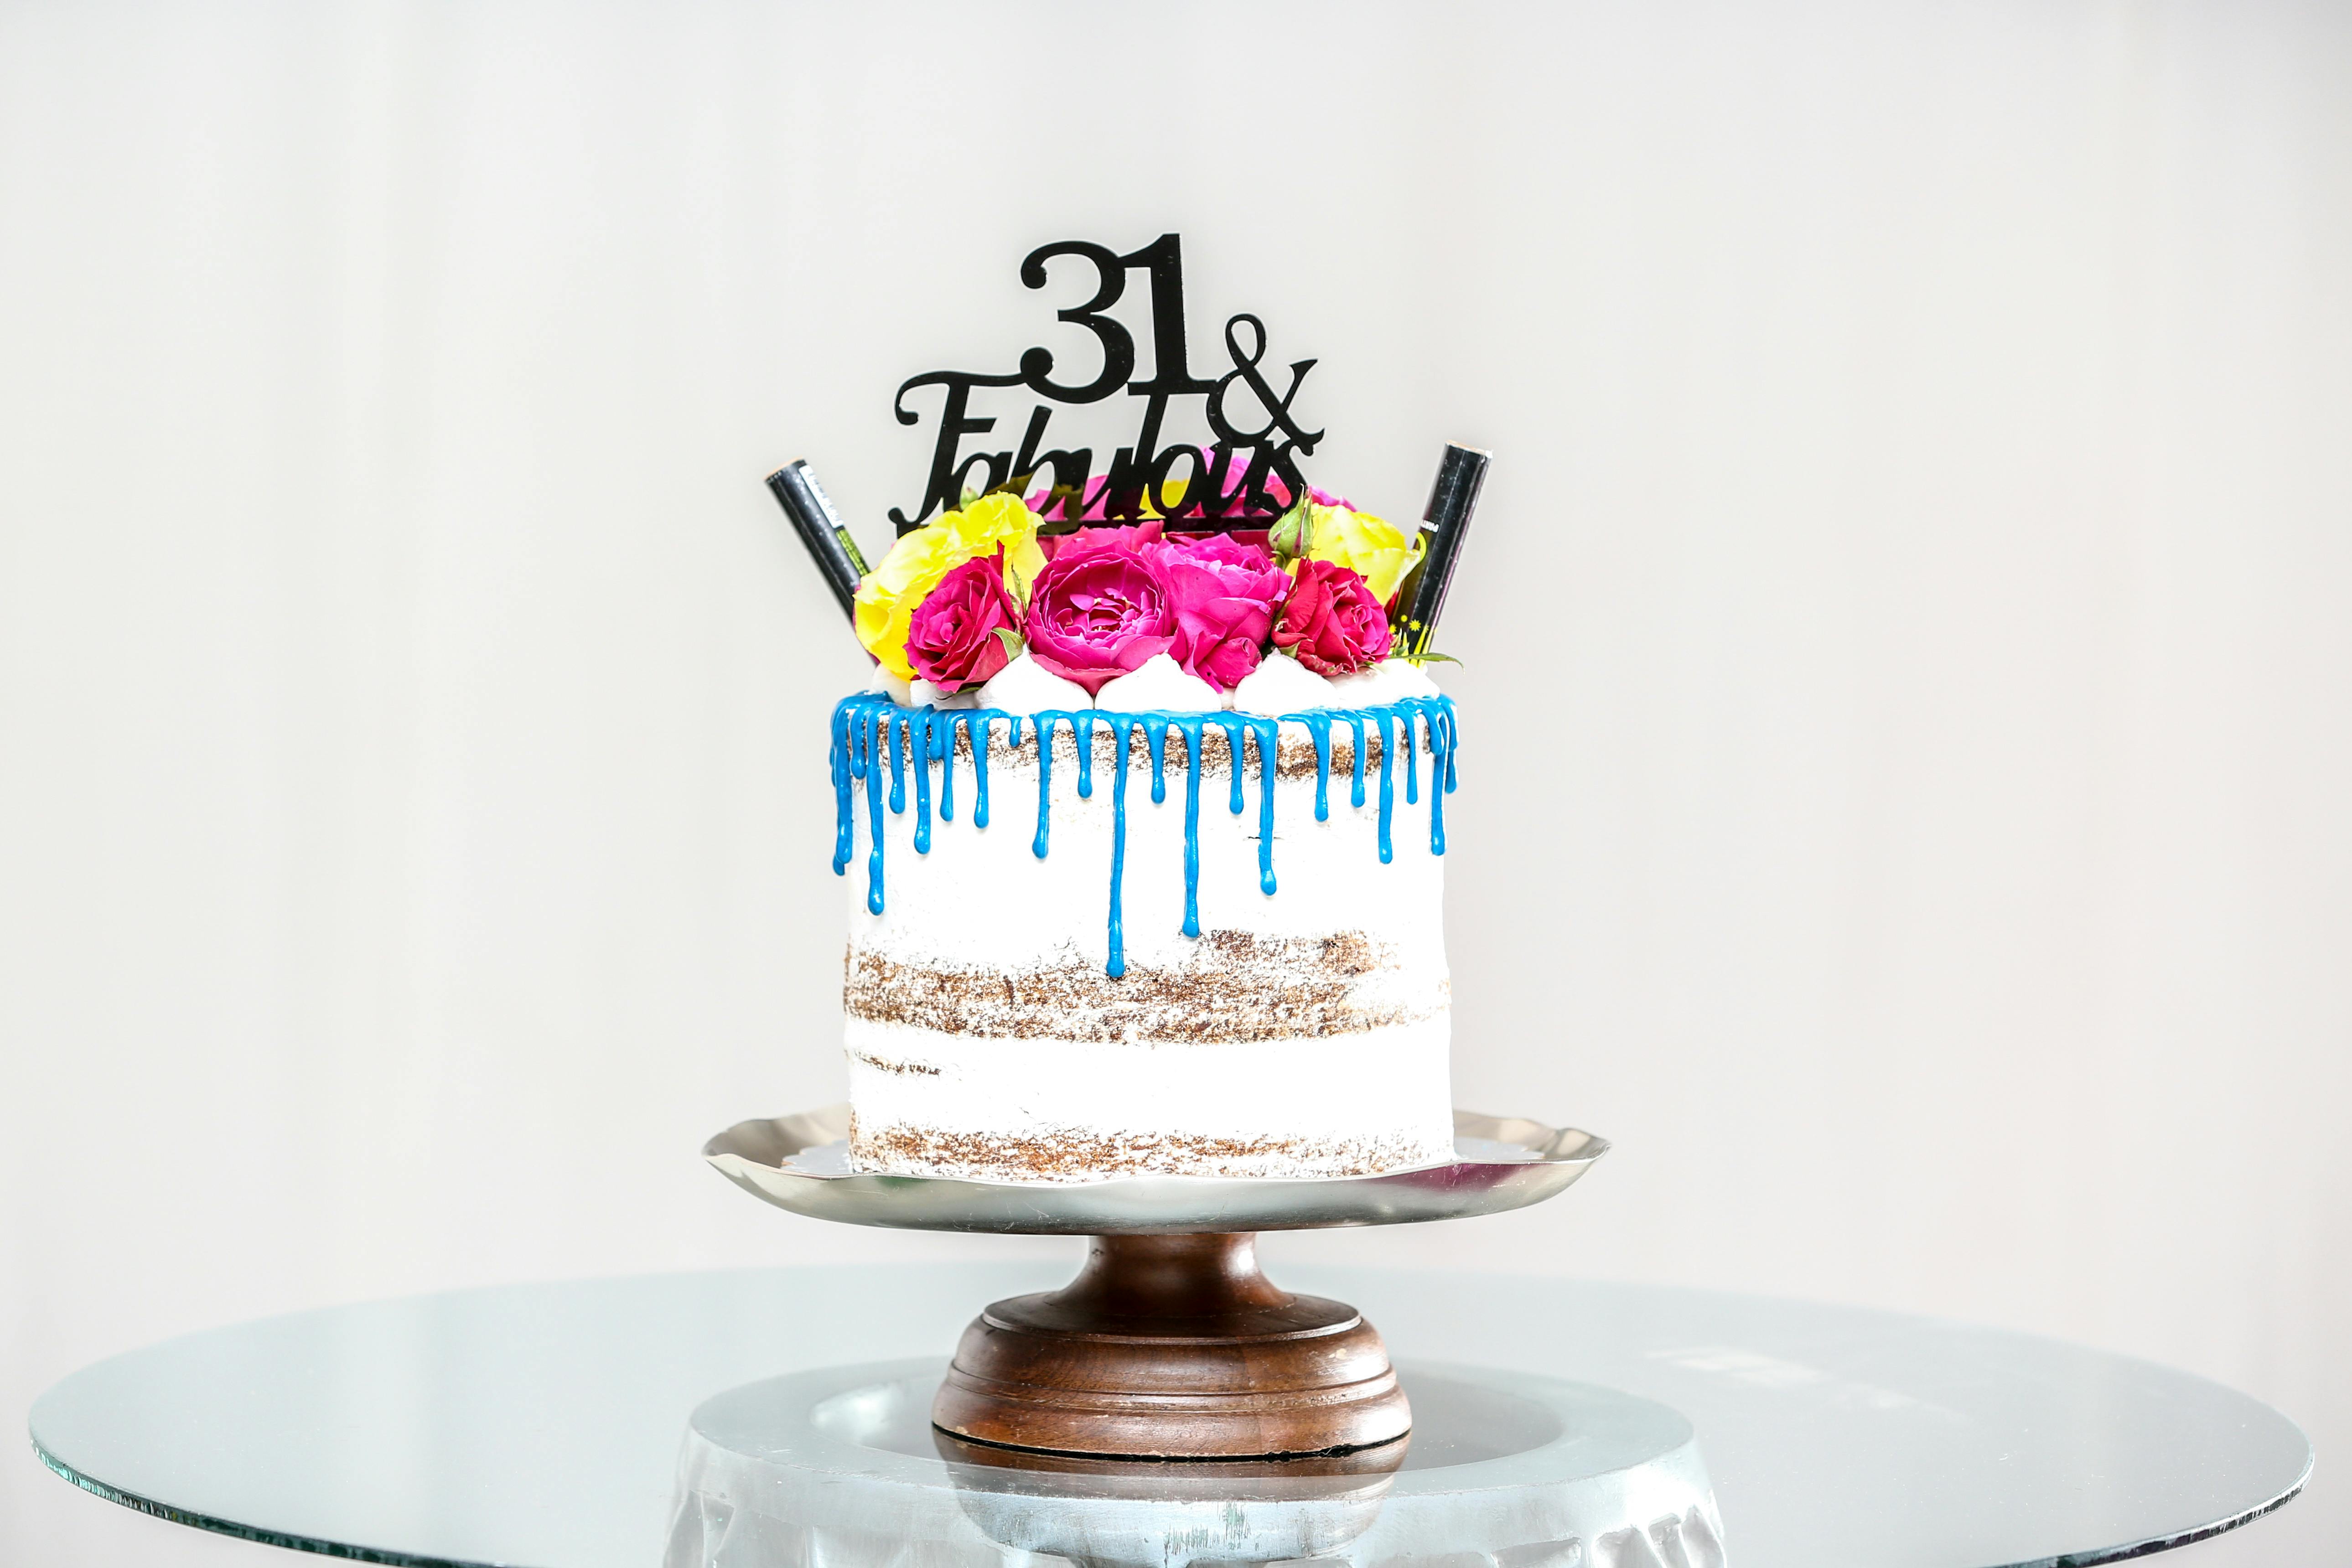 CURSIVE Happy Birthday Cake Topper - BLUE | Bake Group